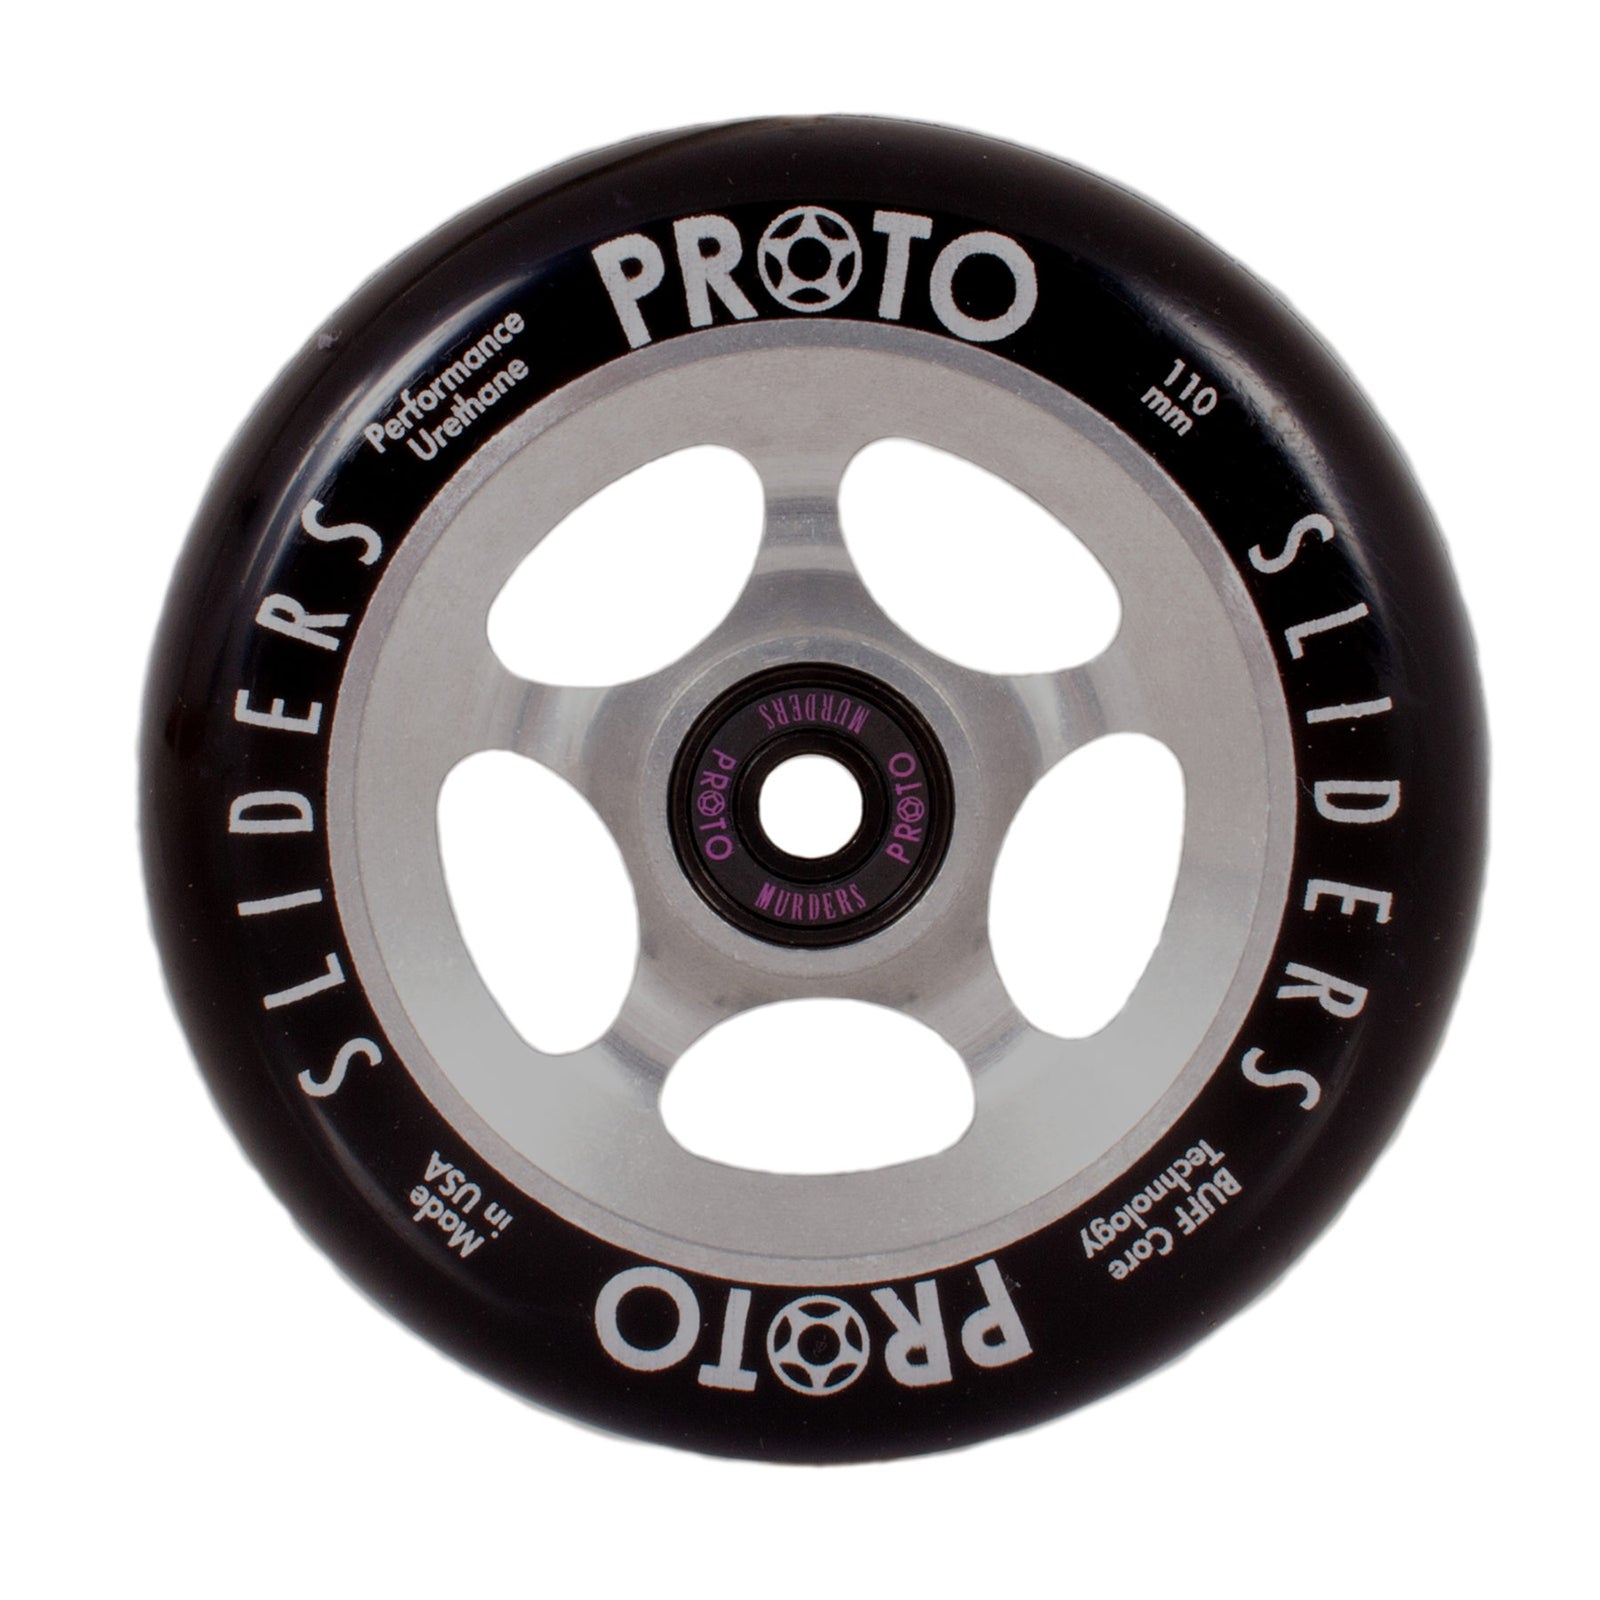 PROTO – Classic Sliders 110mm (Black on Raw Chrome) Raw